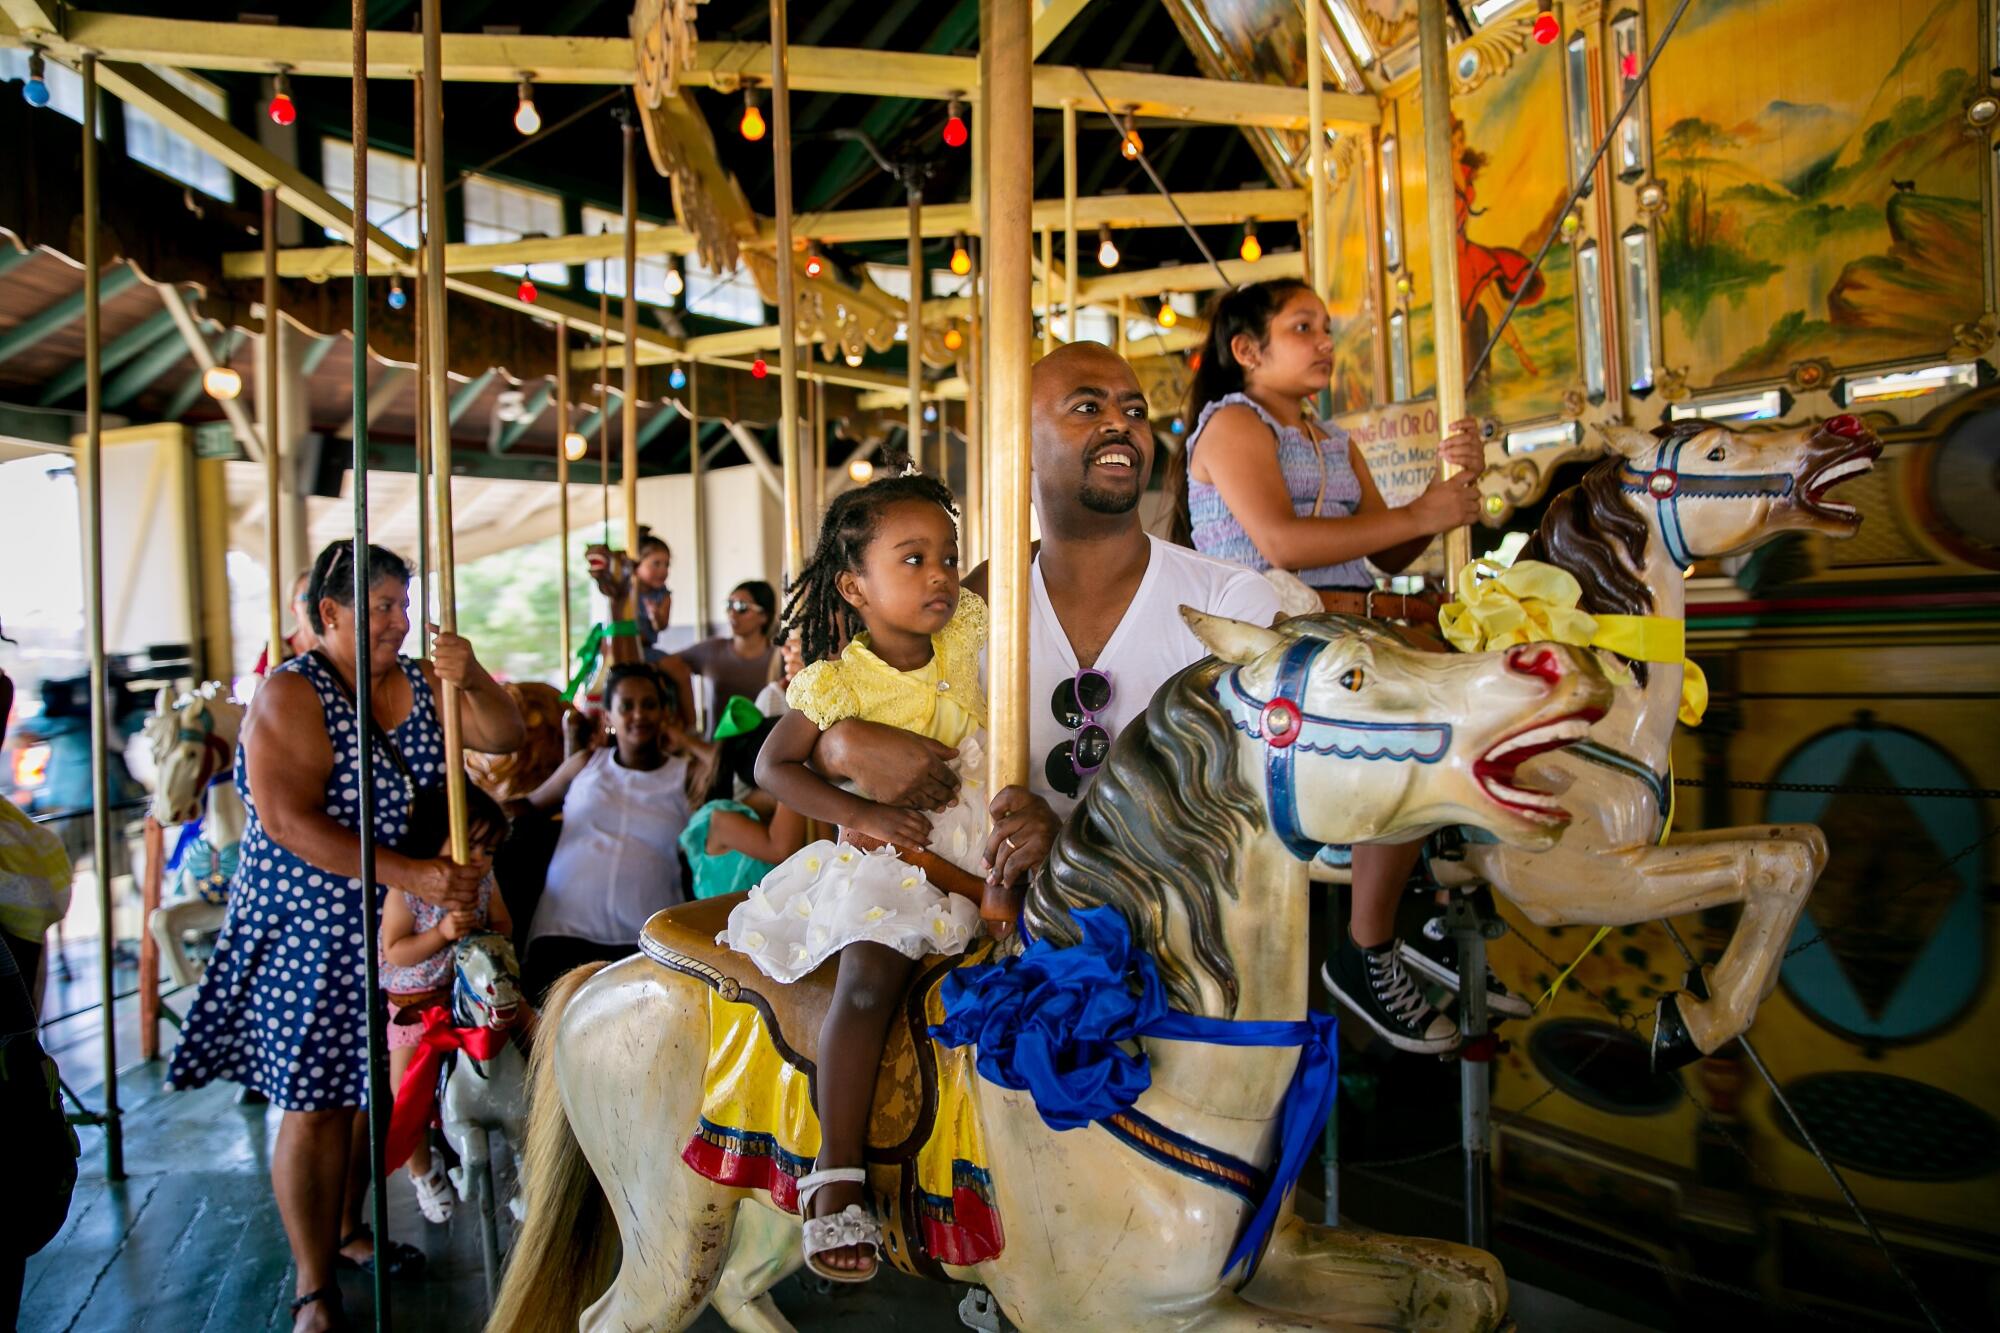 The Balboa Park Carousel 